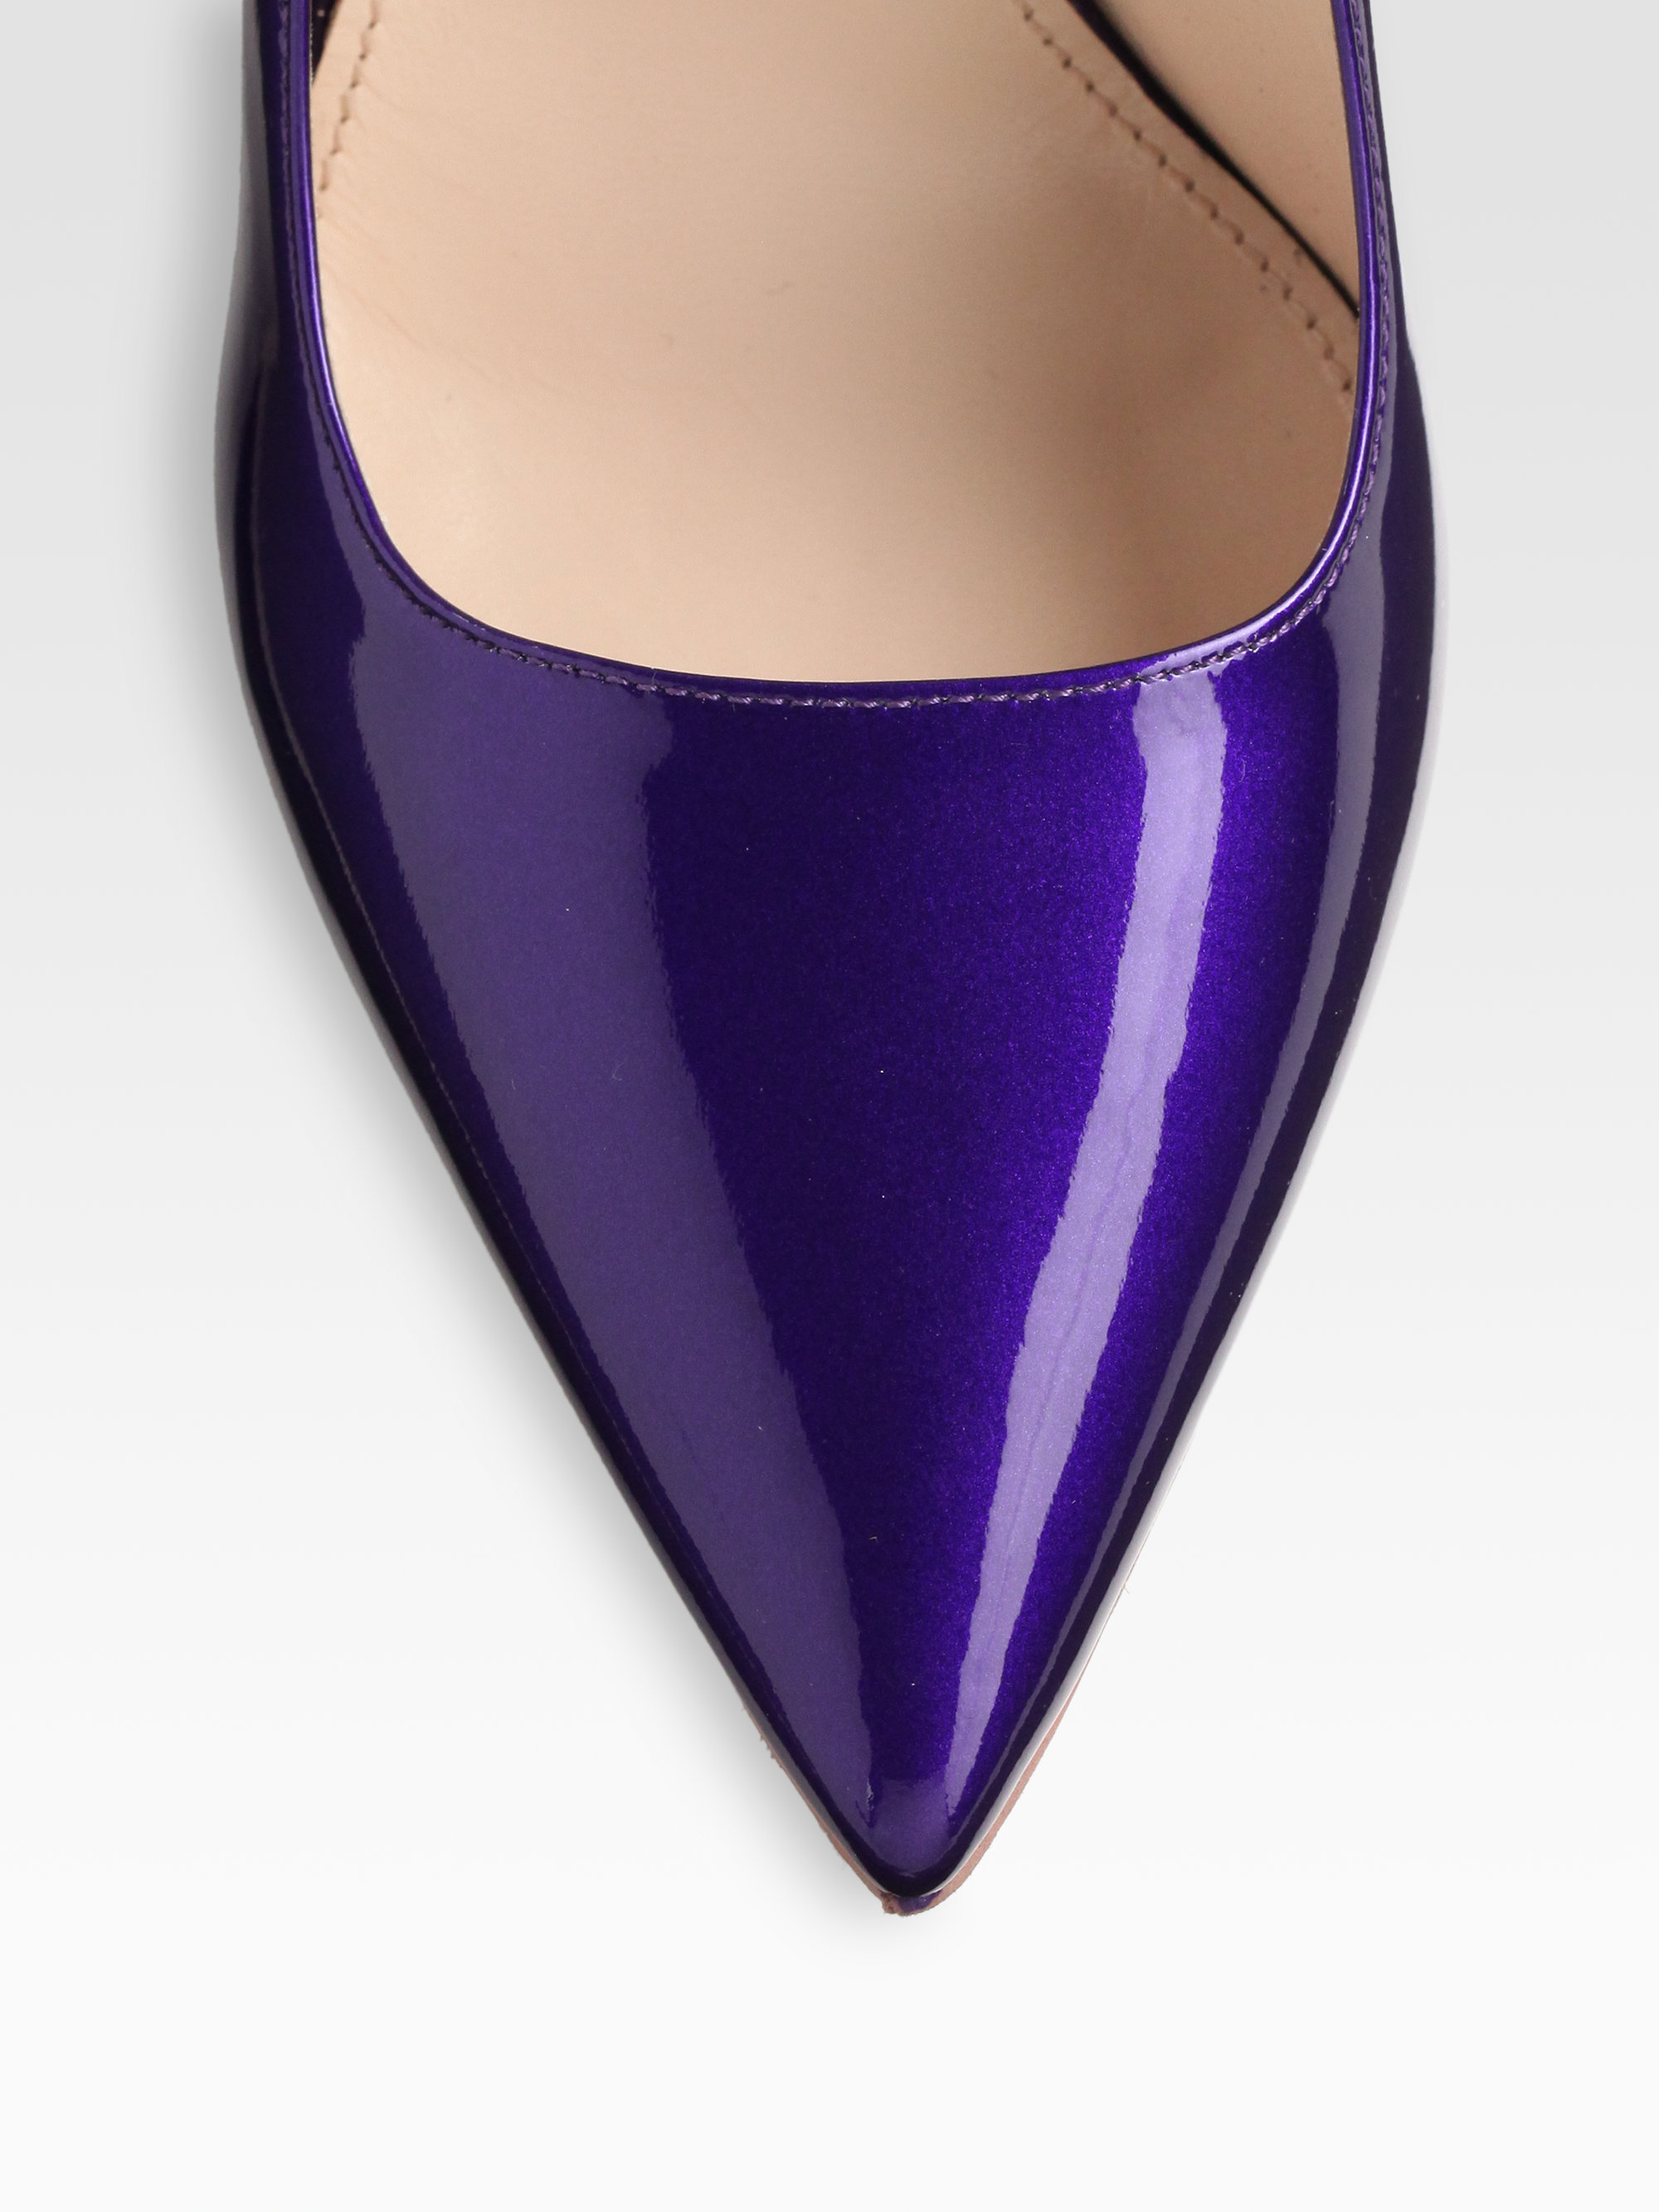 Prada Patent Leather Chrome Heel Pumps in Purple | Lyst